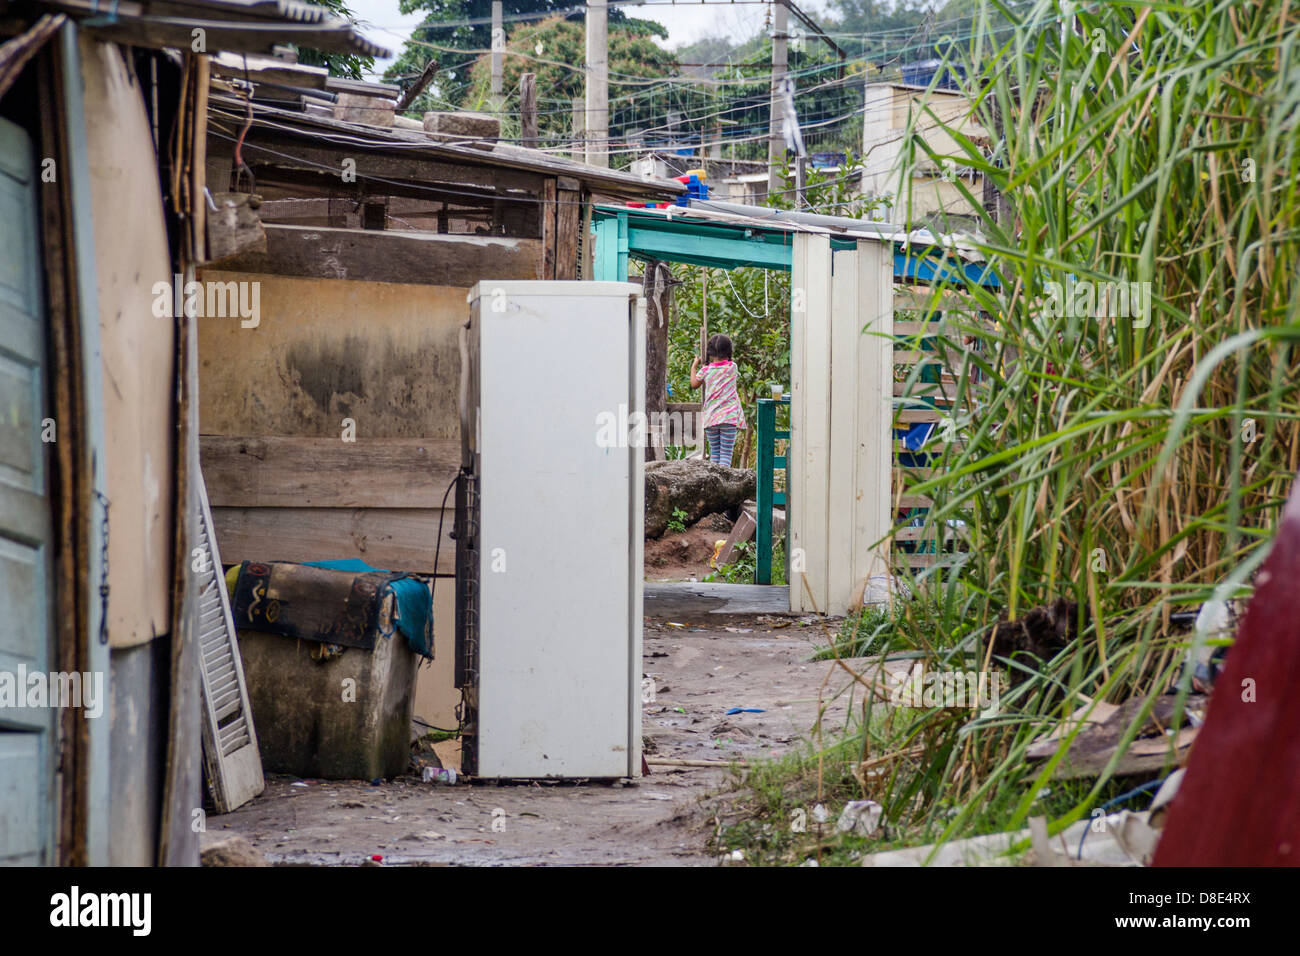 Children in the slum, north of Rio de Janeiro Stock Photo